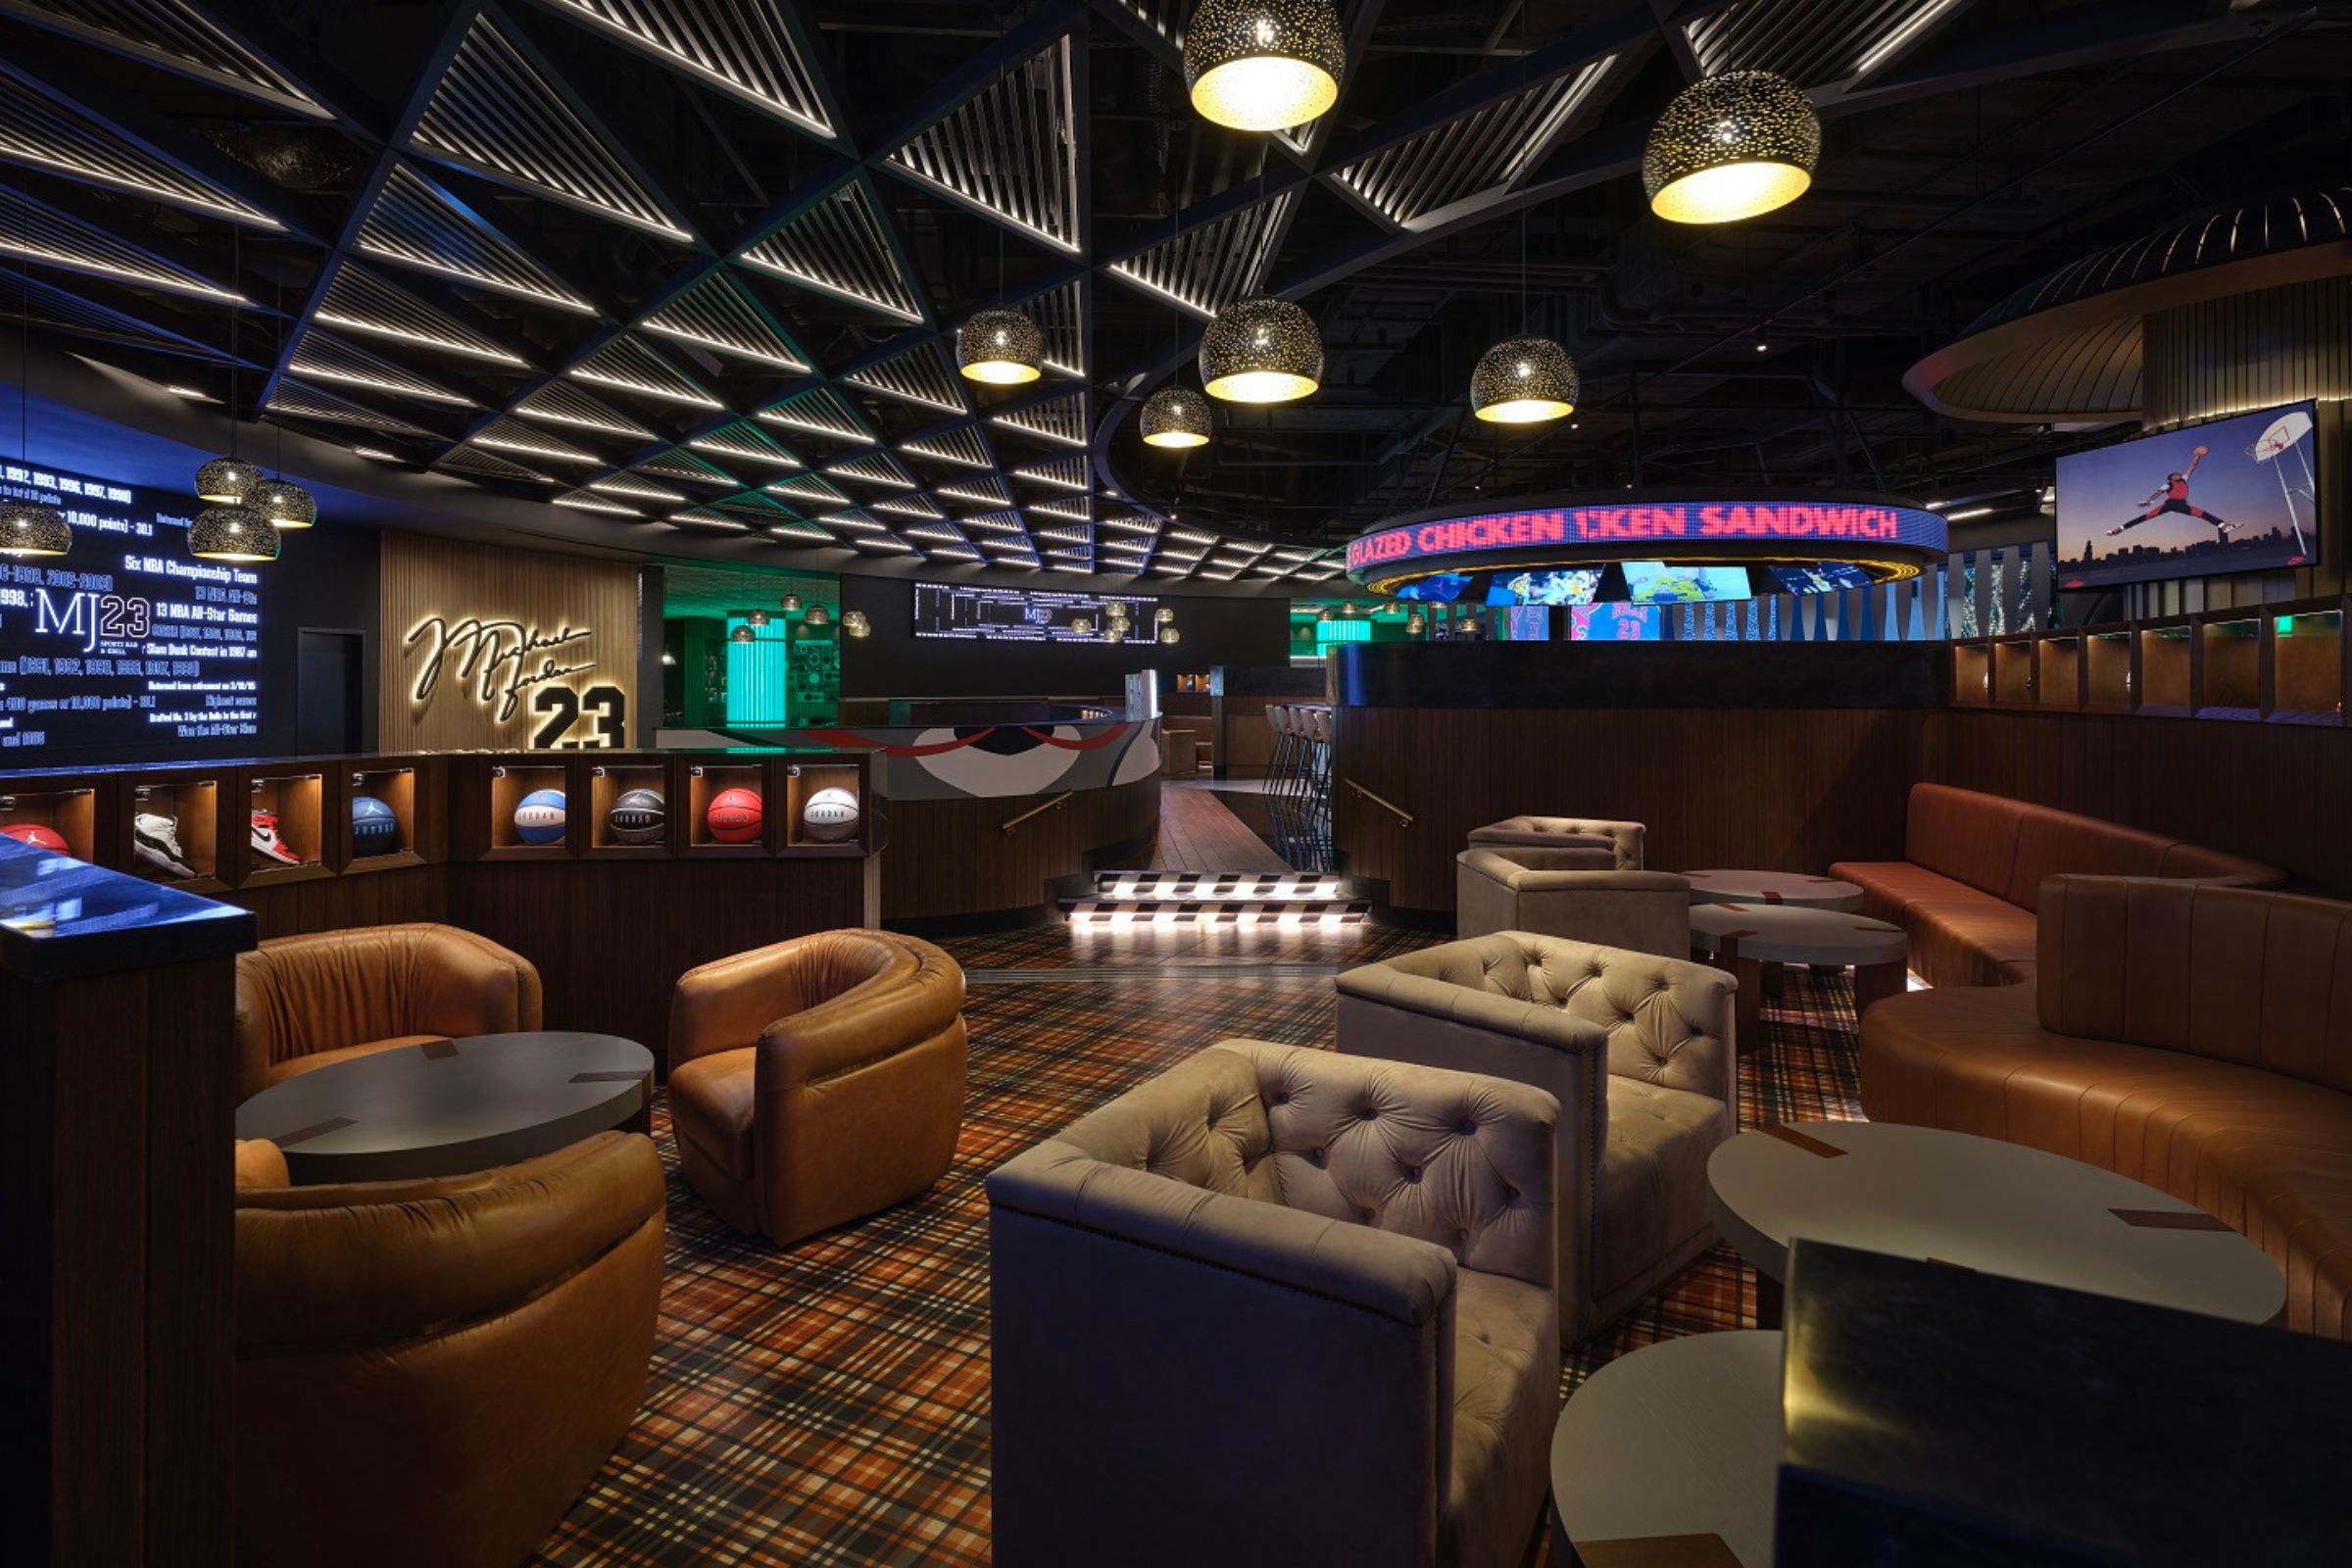 MJ23 Sports Bar& Grill, Inspire Resort, South Korea, Lounge Area - desktop version